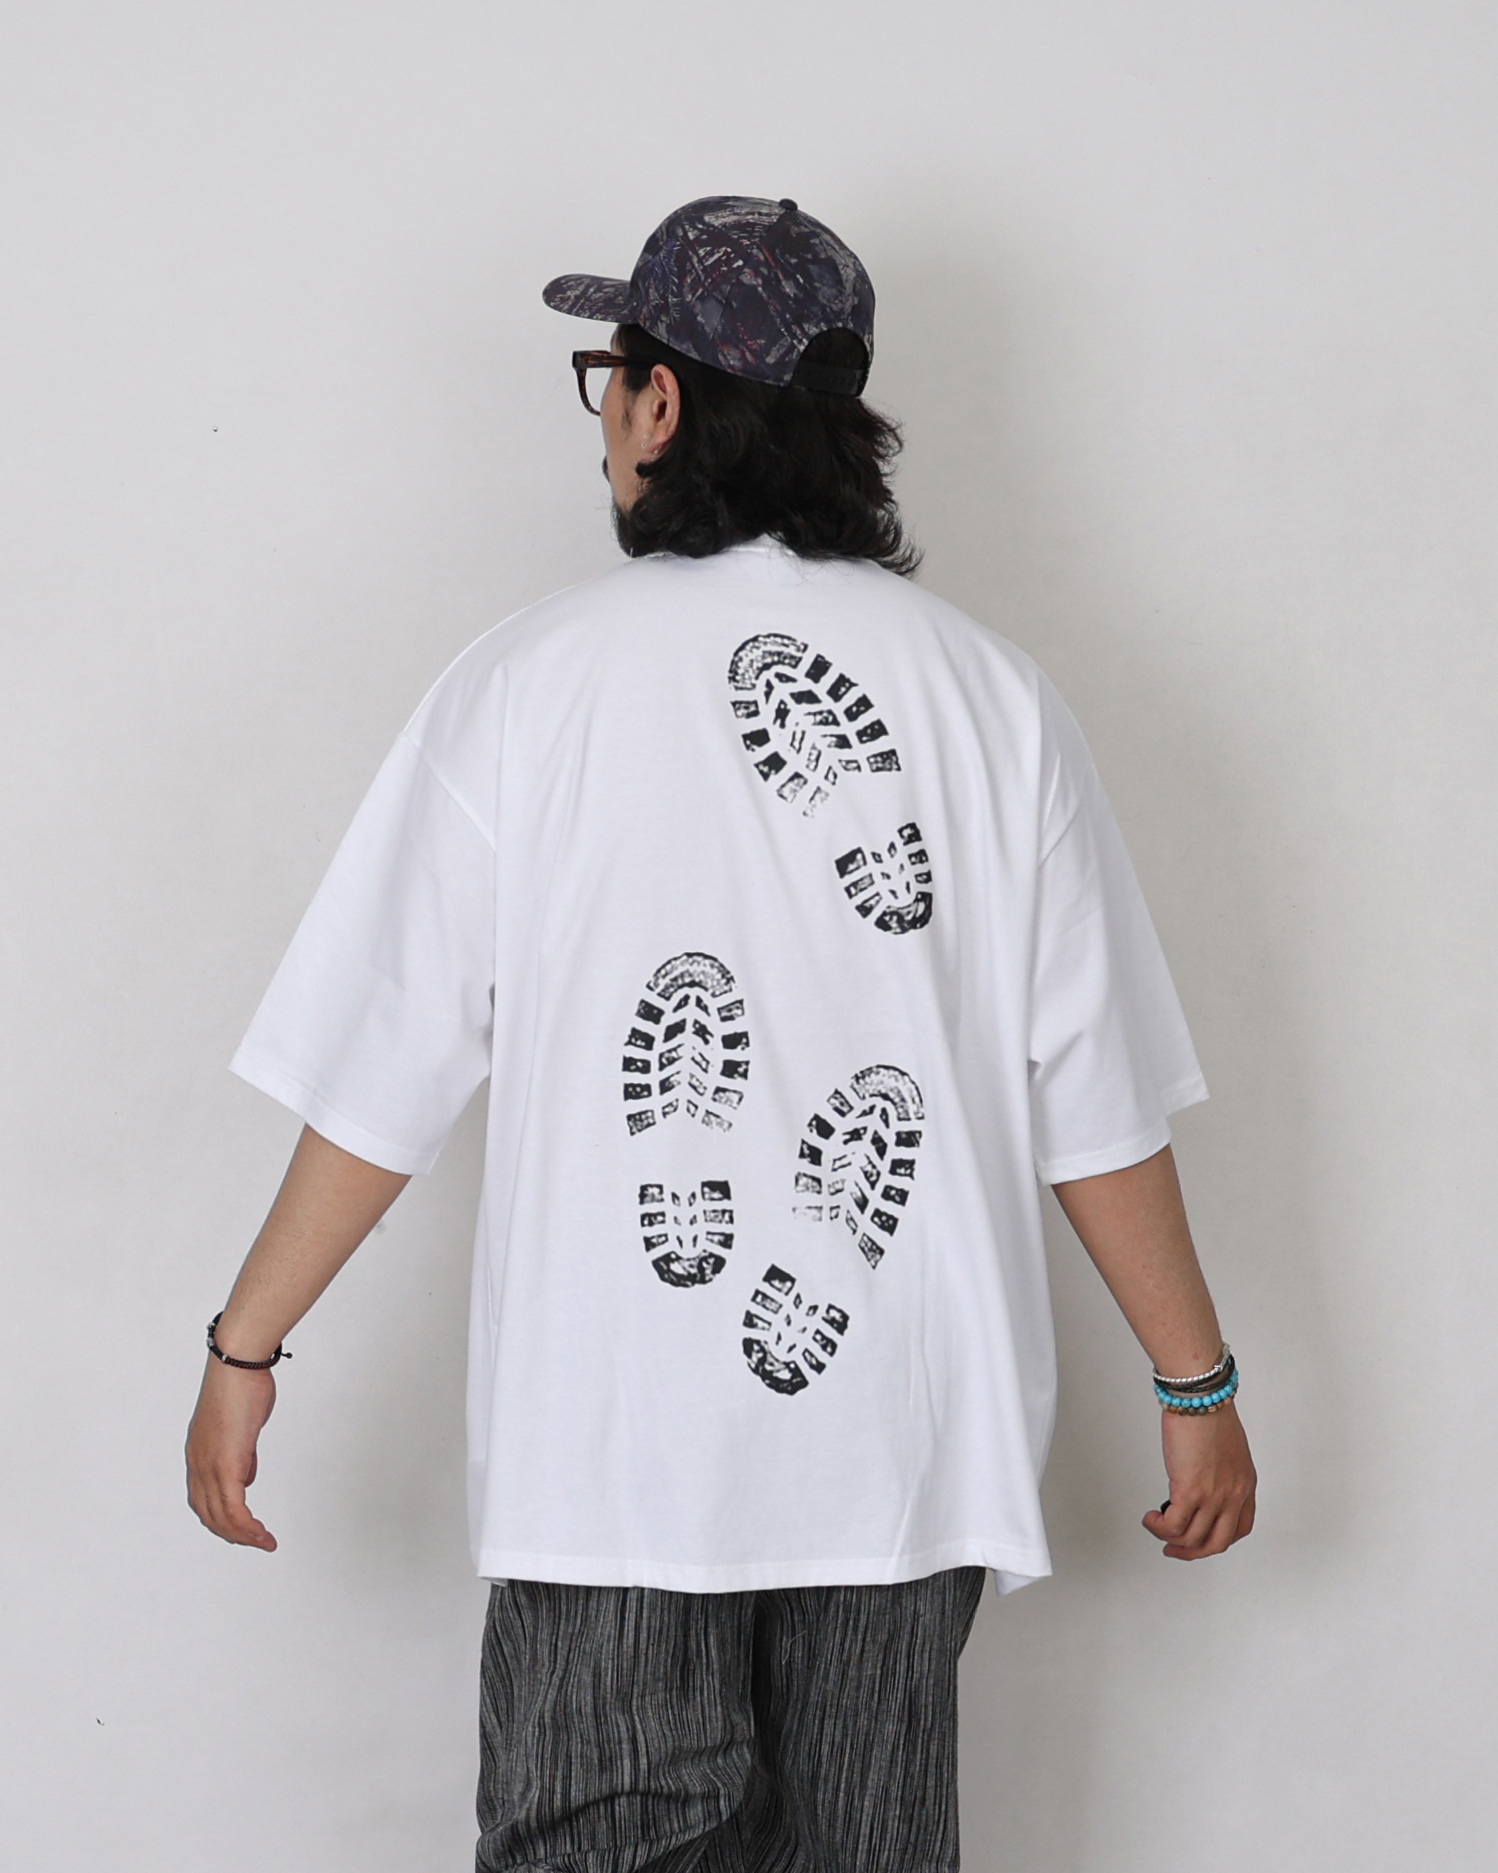 FOOT Track Back Printing T Shirts (Black/Navy/Khaki/Ivory)